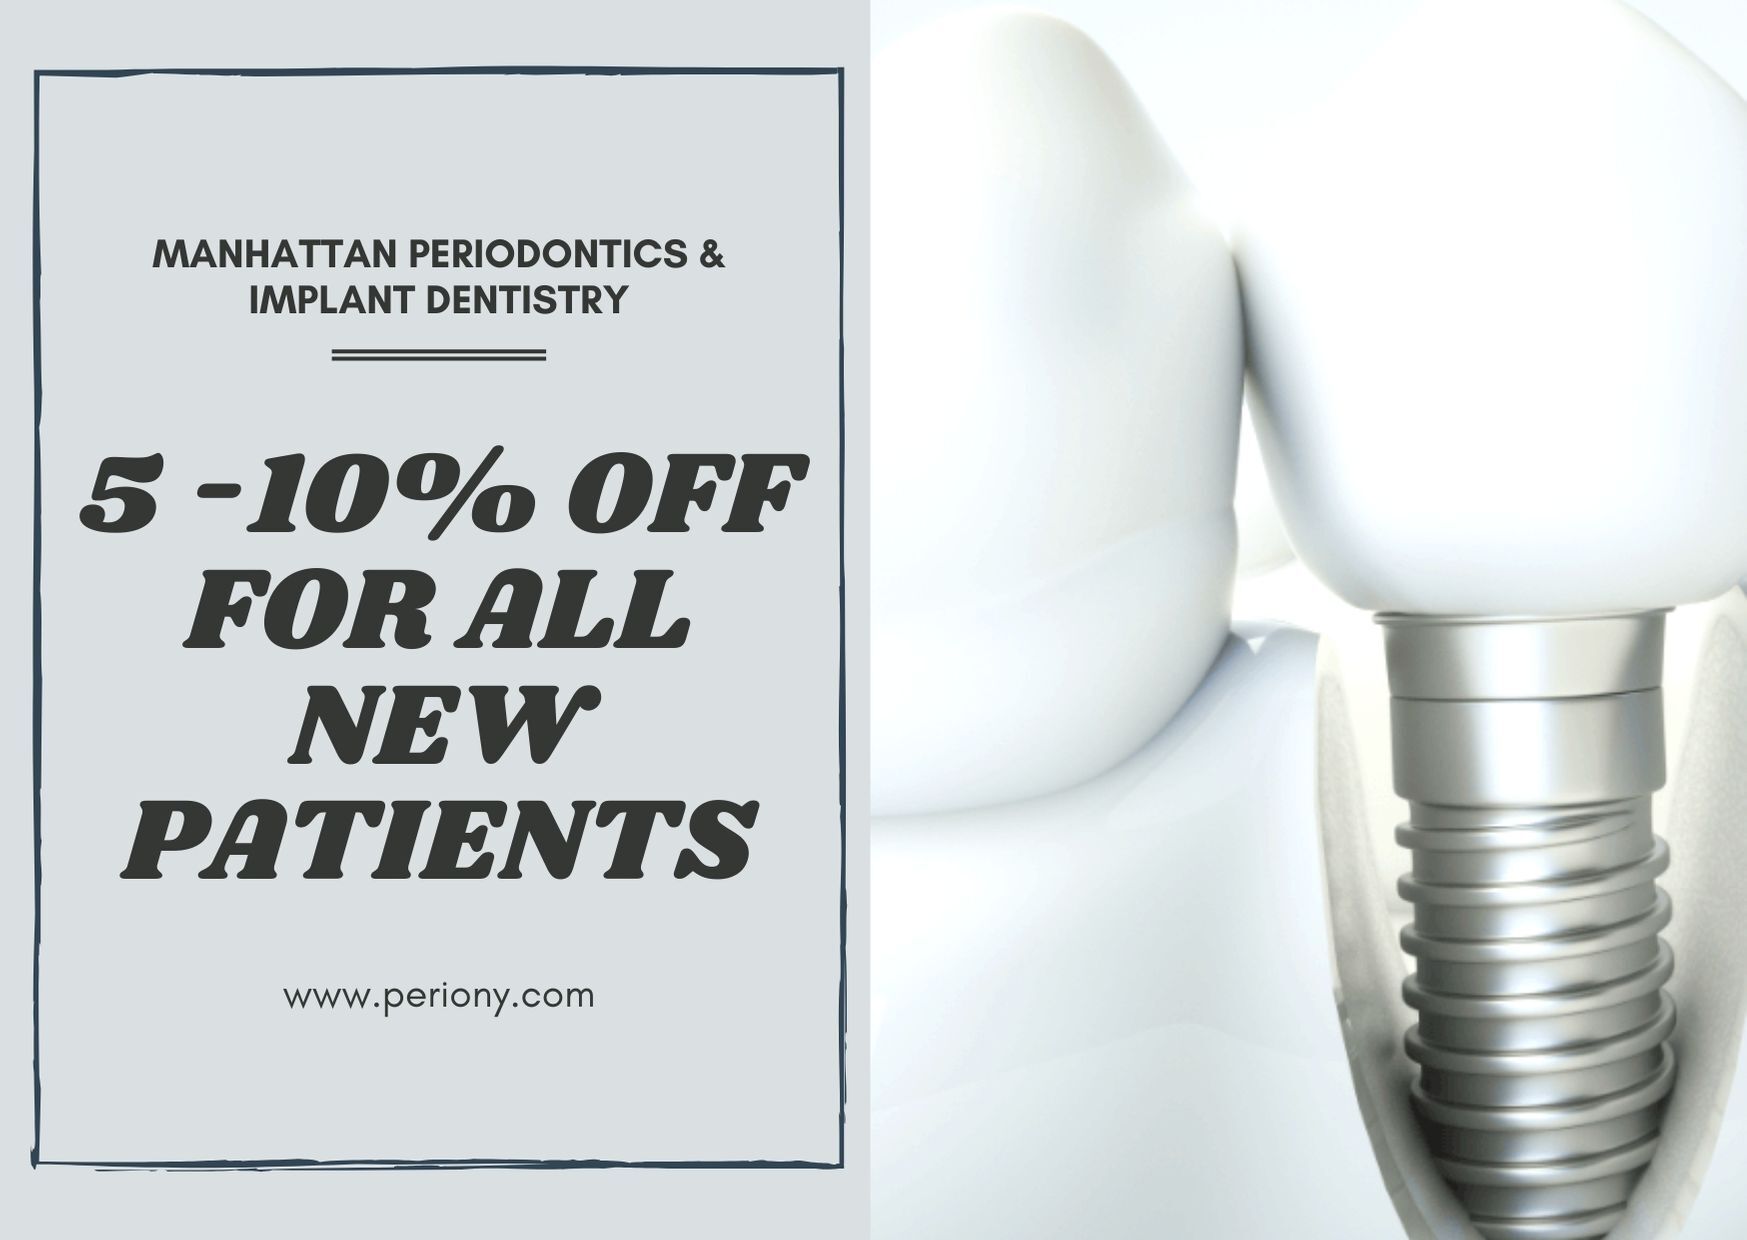 Manhattan Periodontics & Implant Dentistry - New York, NY, US, periodontist